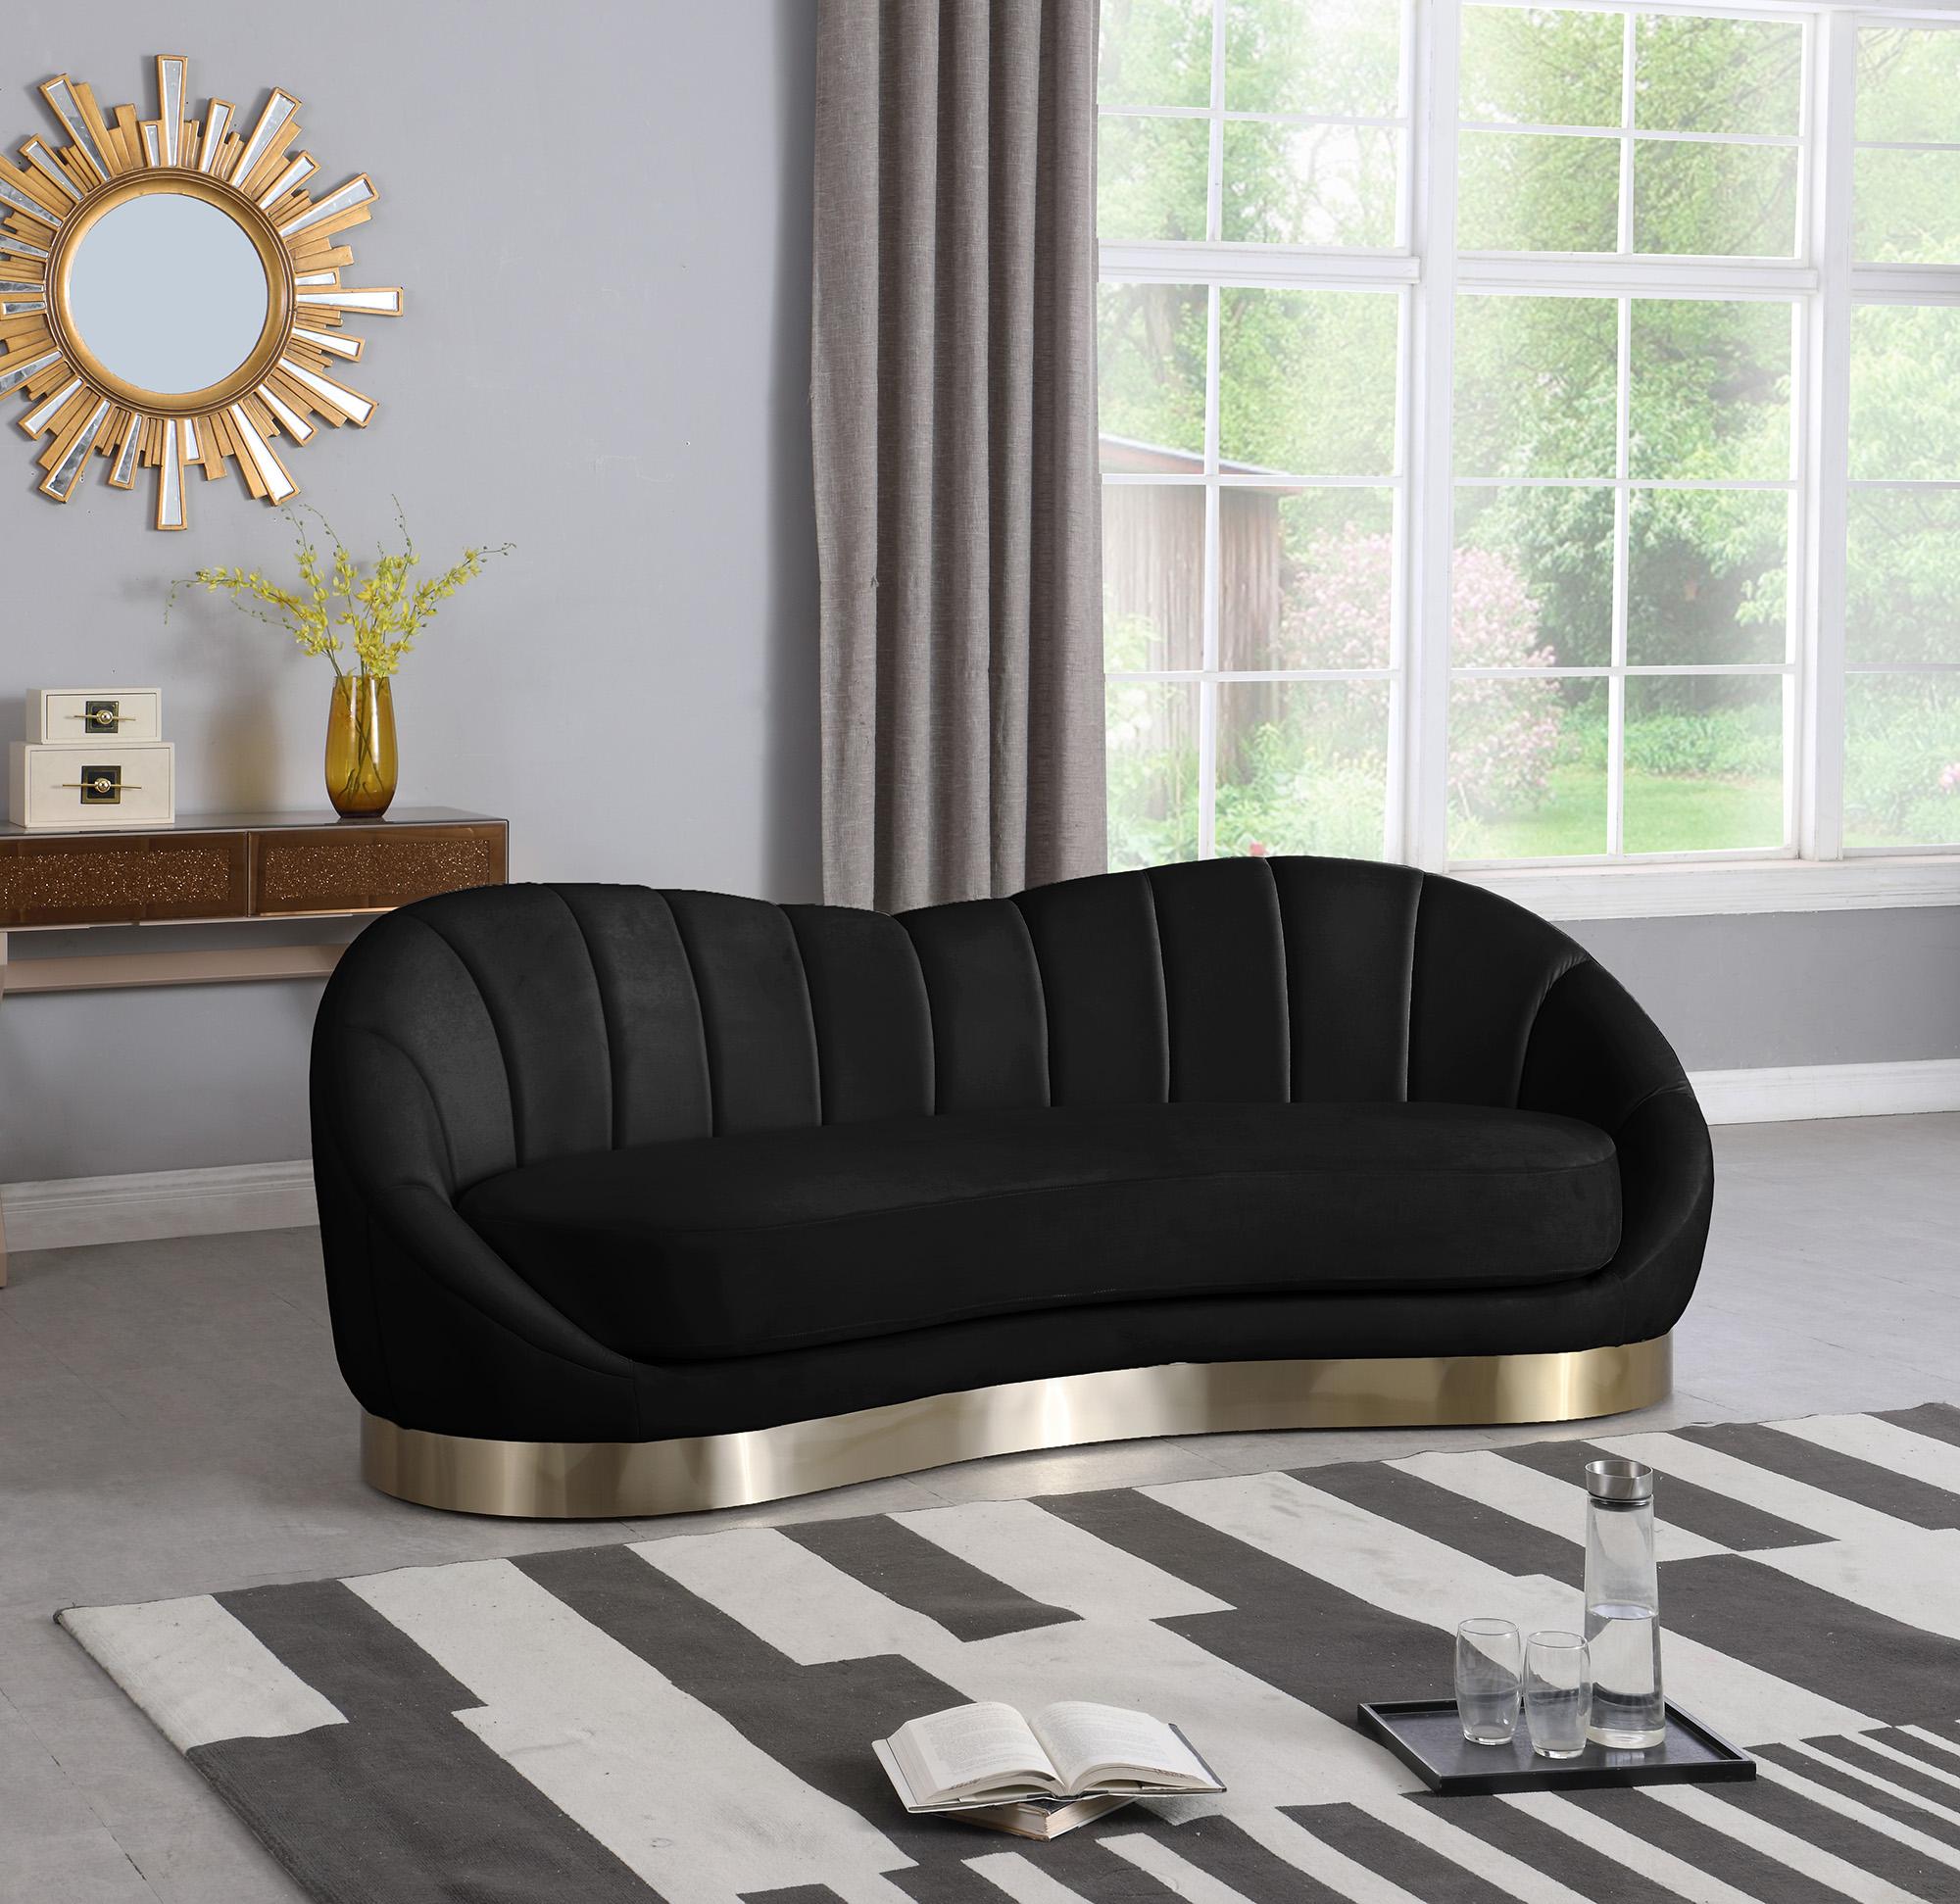 

    
623Black-S Meridian Furniture Sofa
